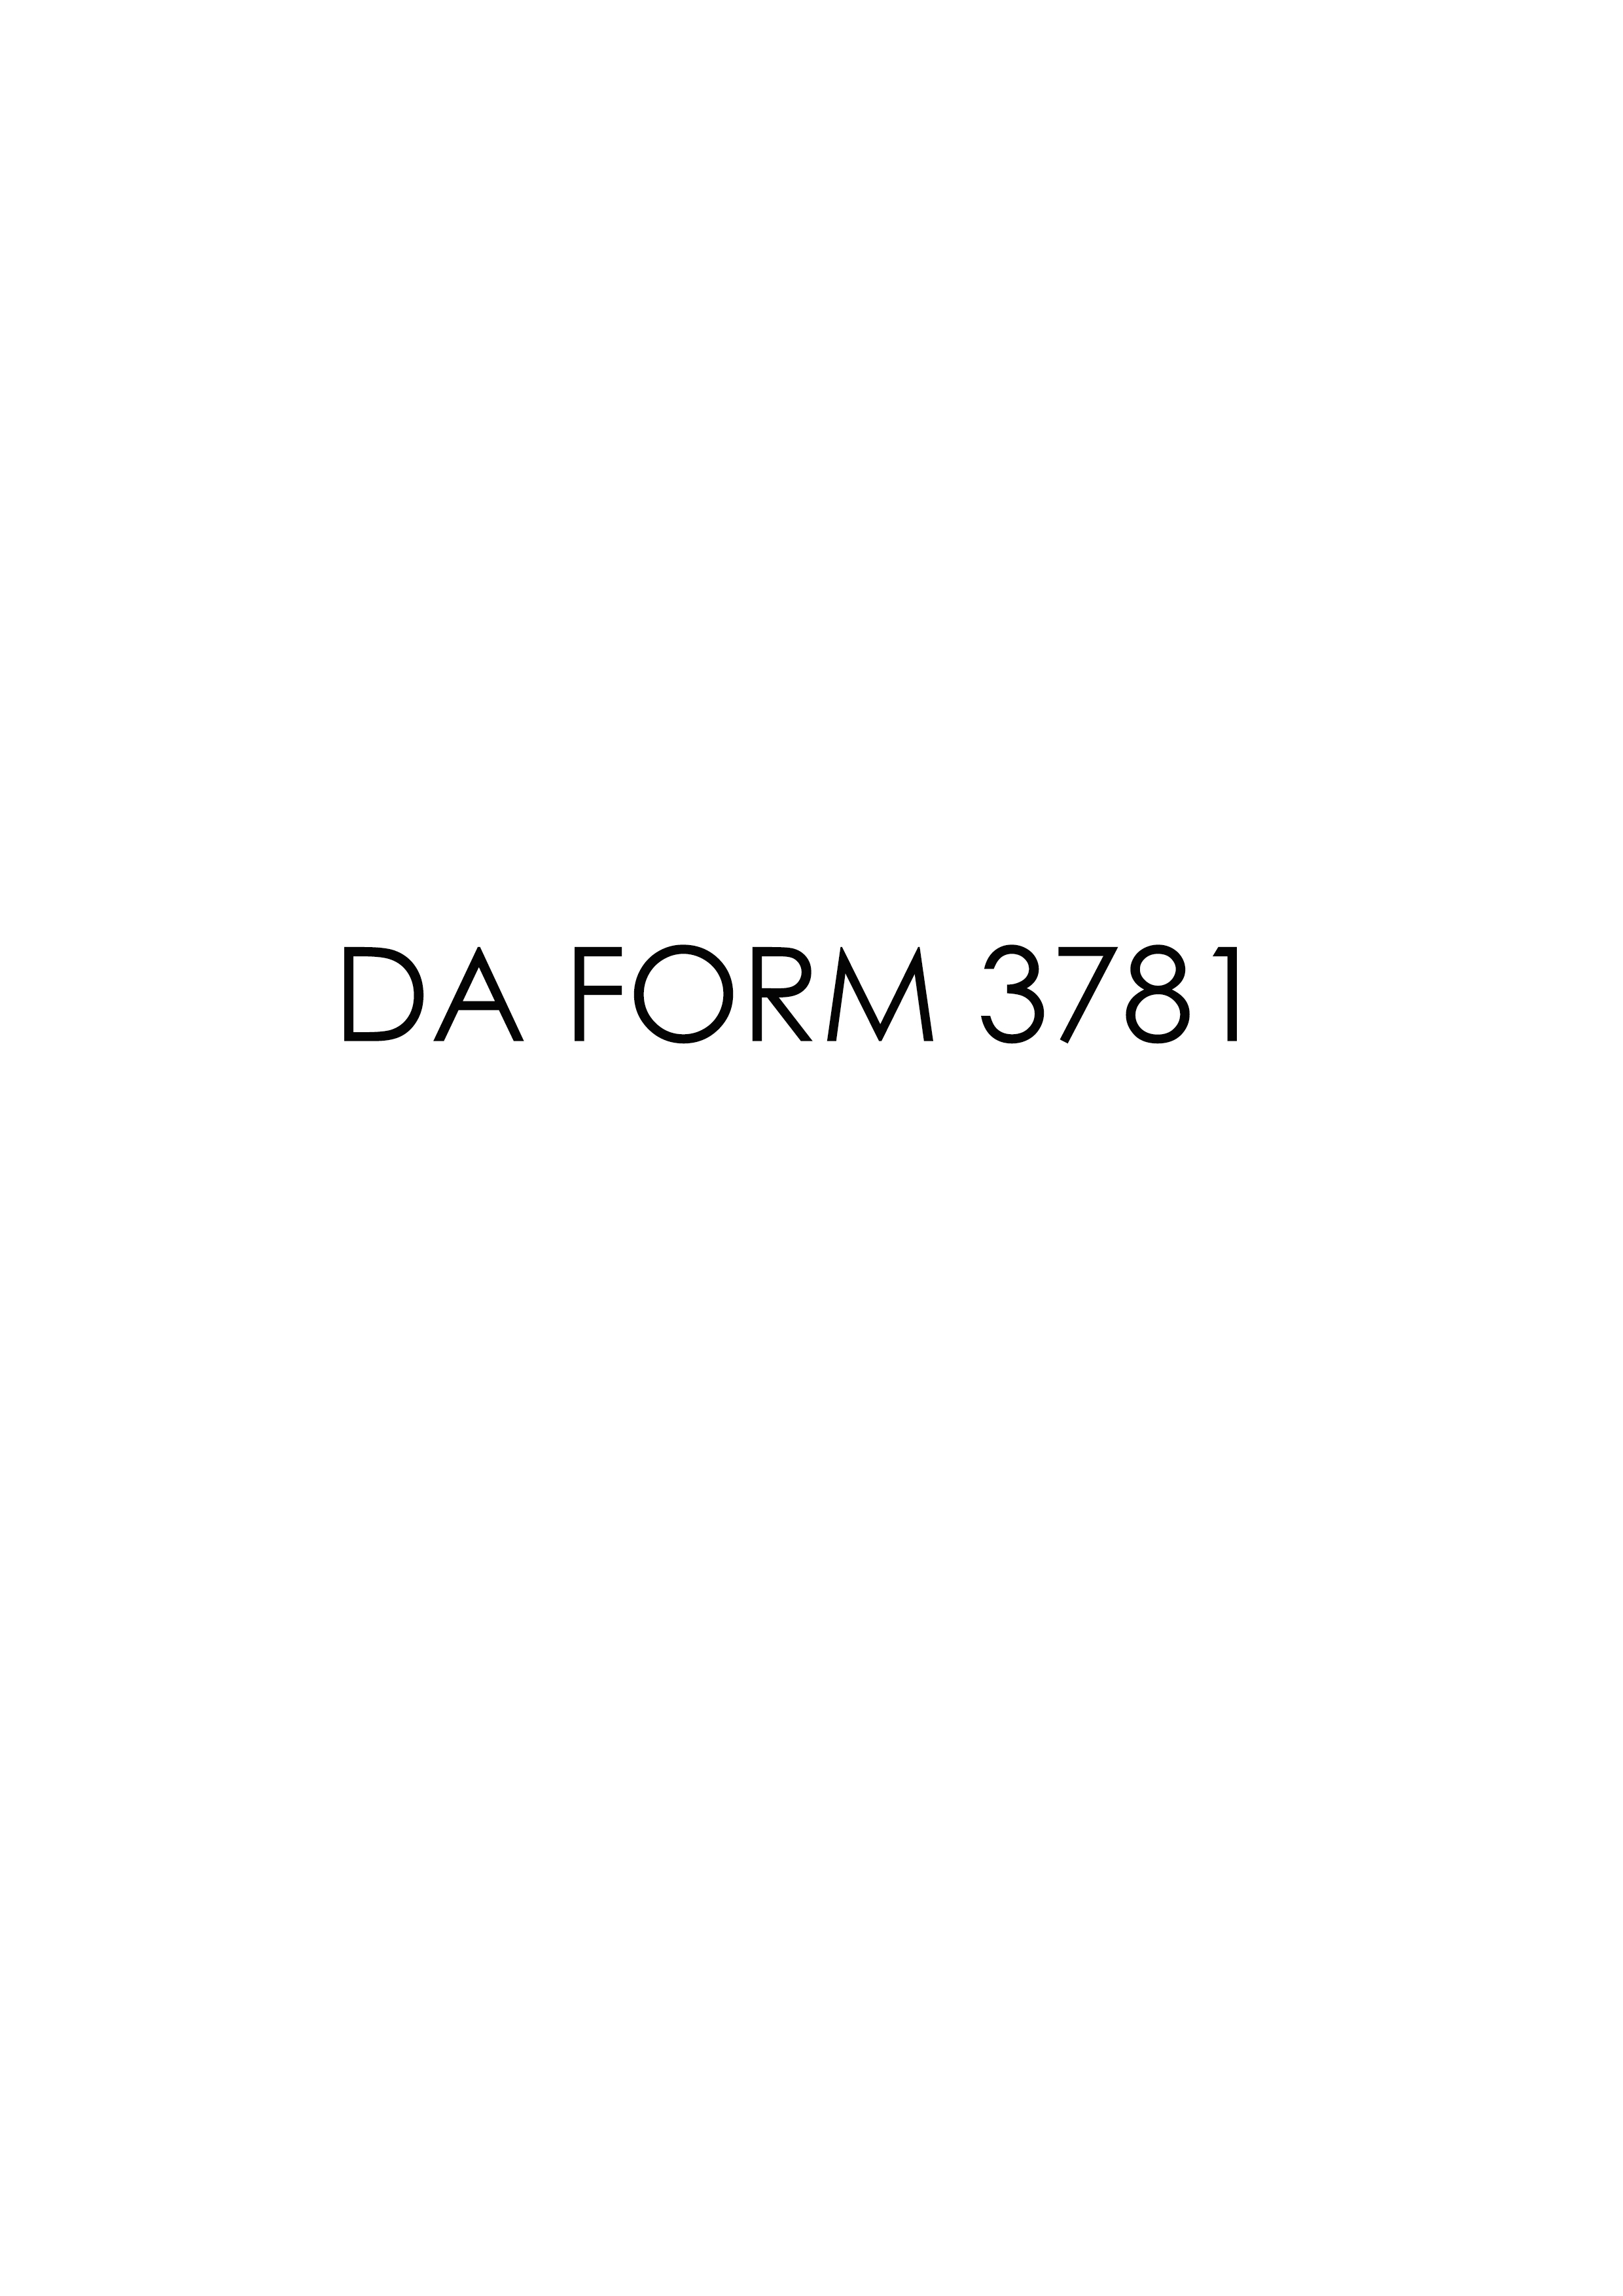 da Form 3781 fillable